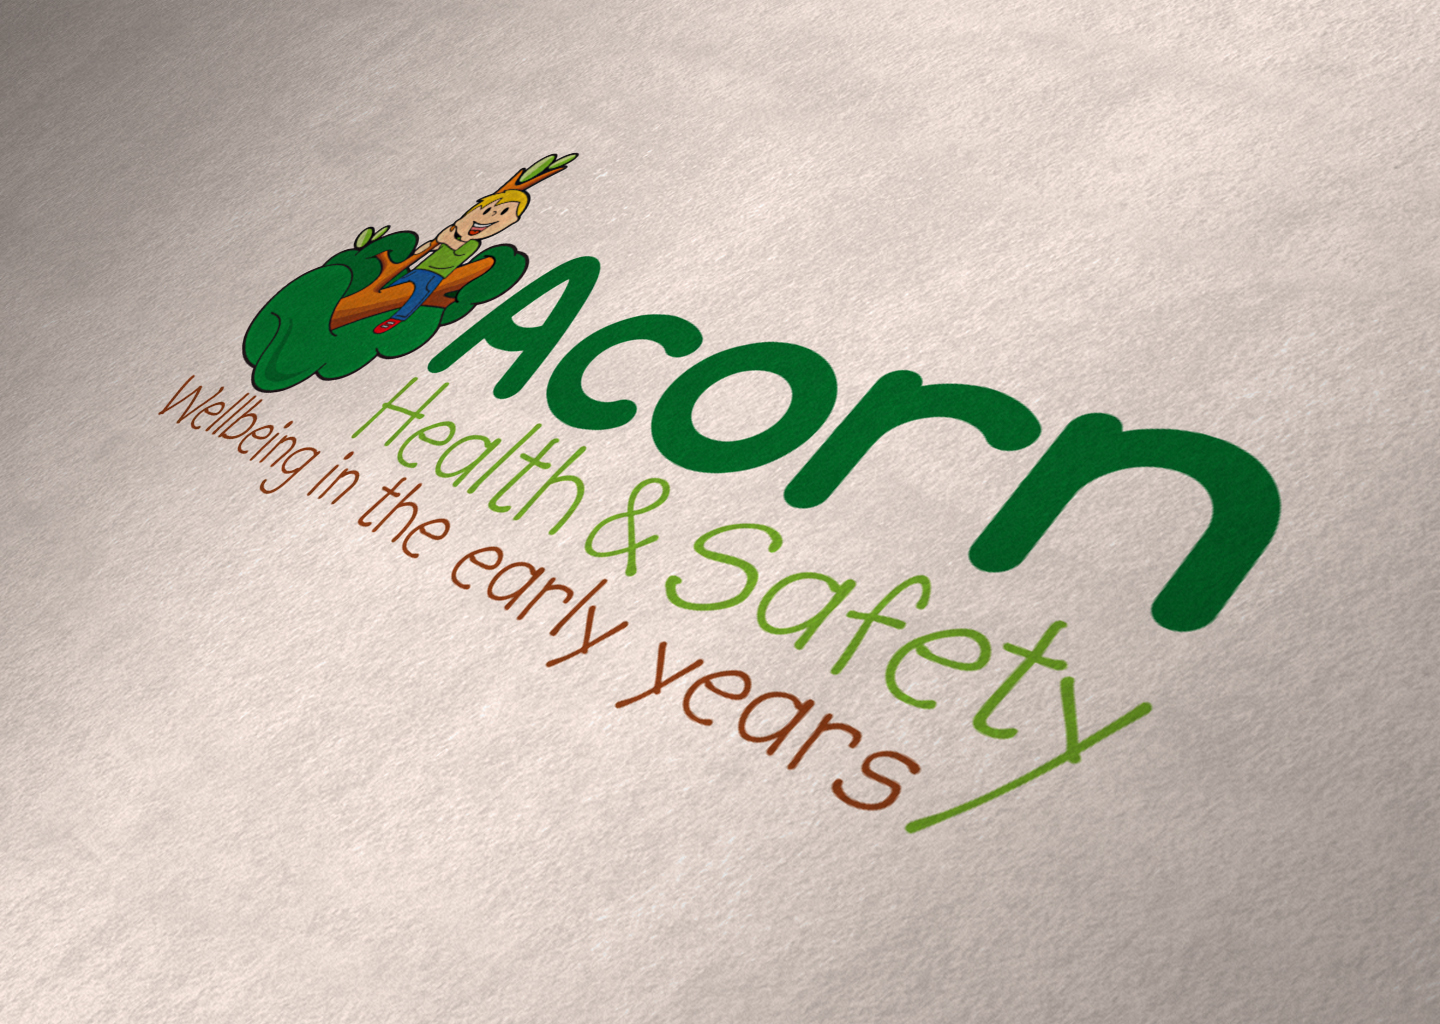 04_Acorn logos_H&S web